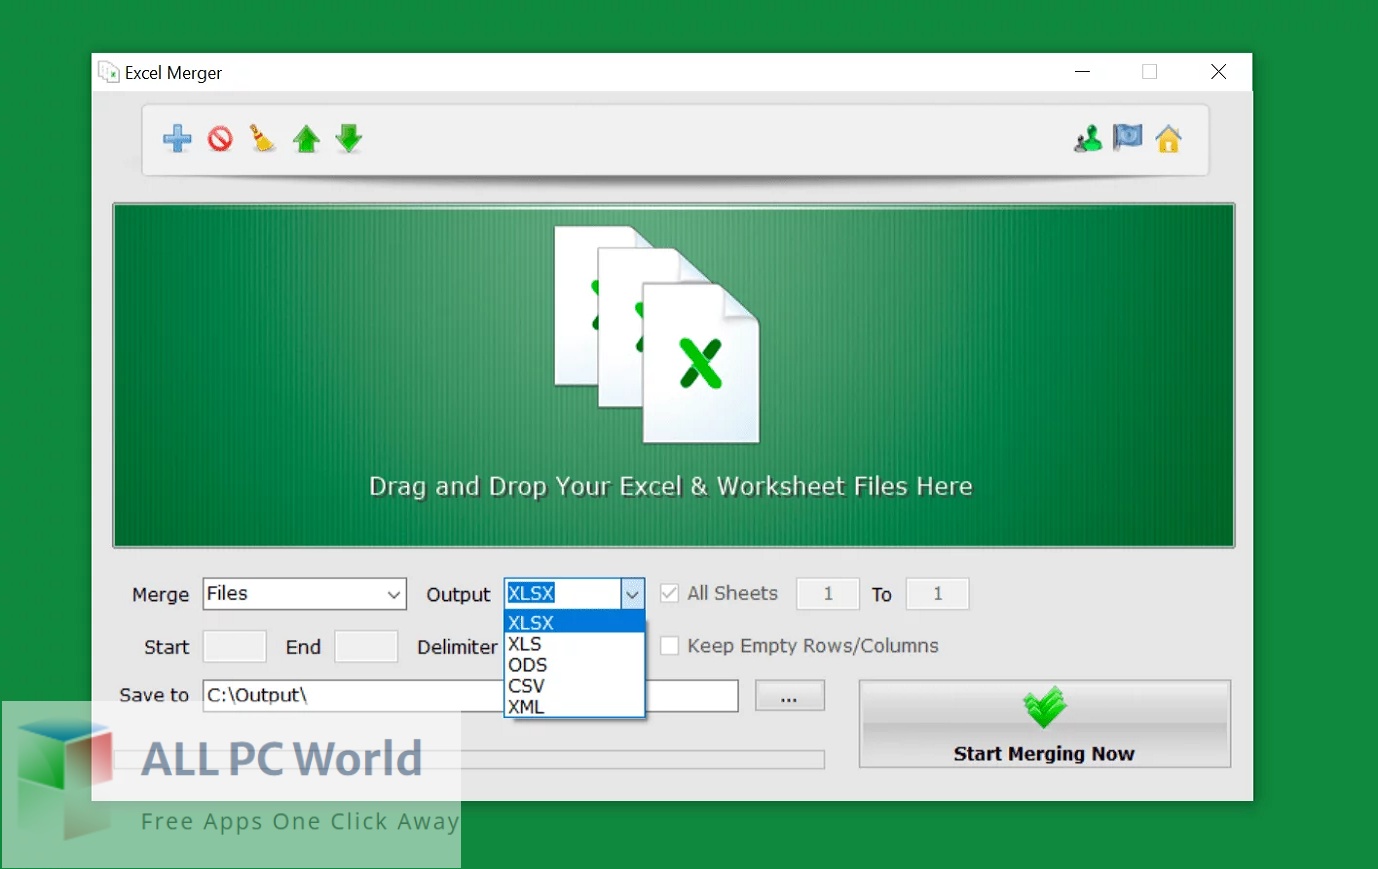 Excel Merger Pro Free Download